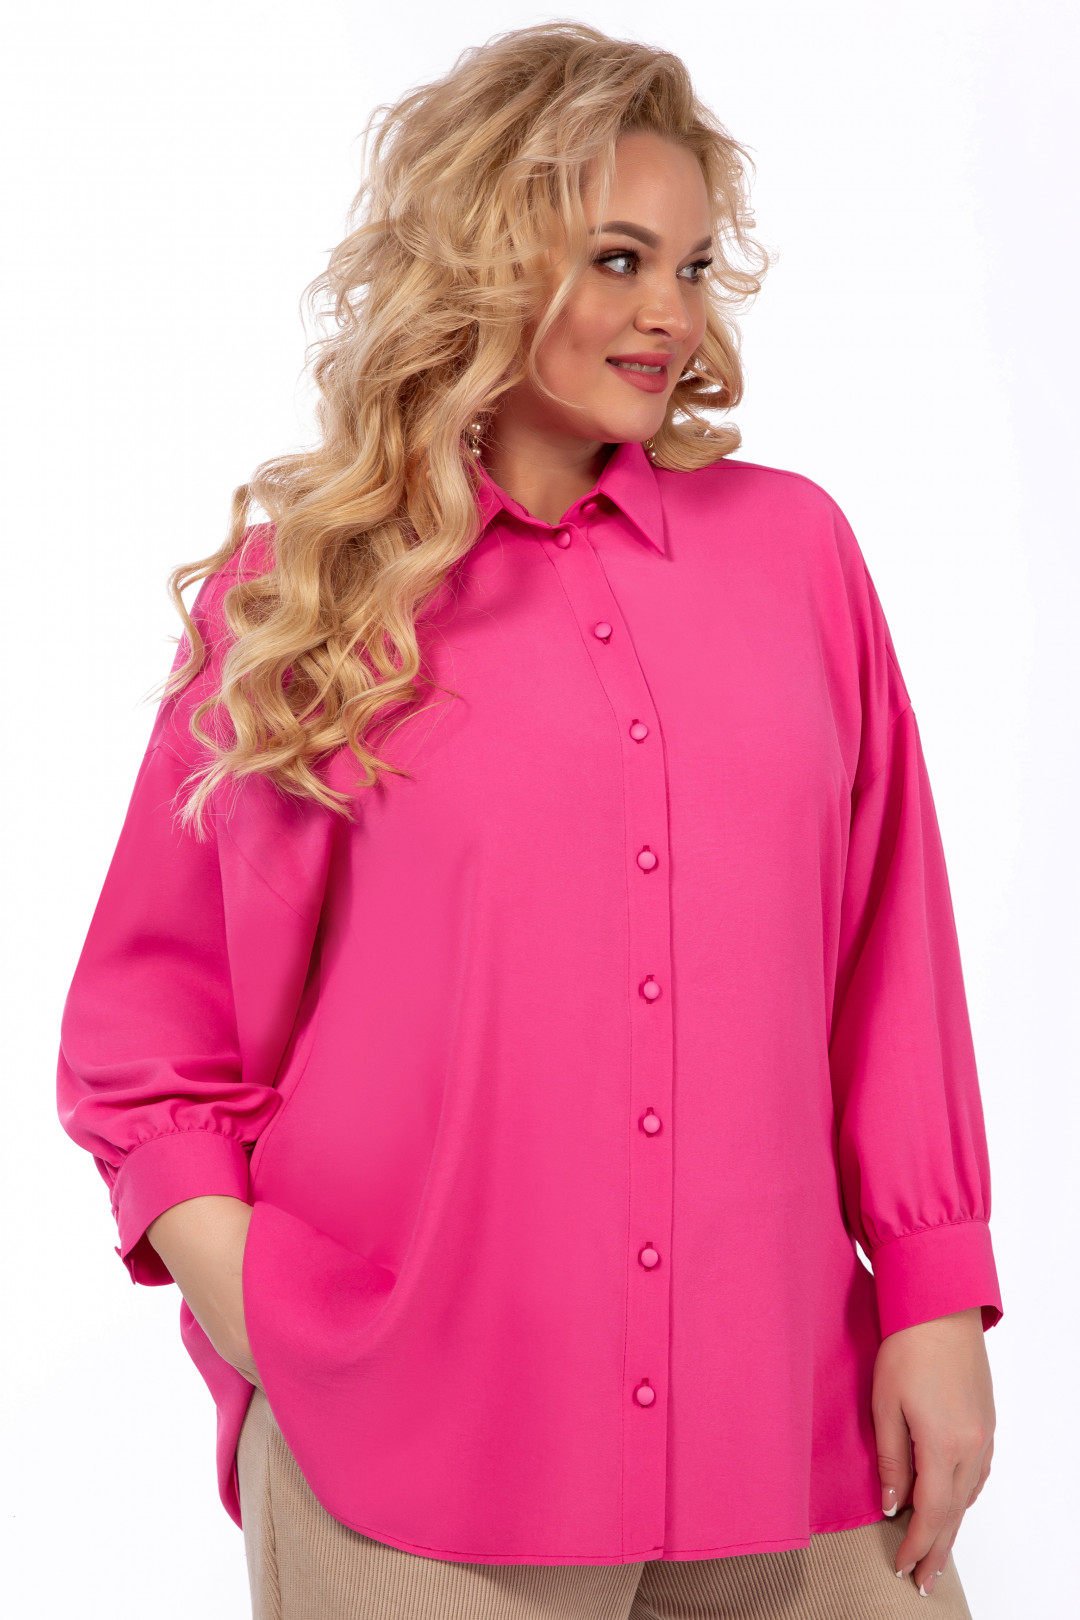 Блузка Элль-стиль 2195а розовый